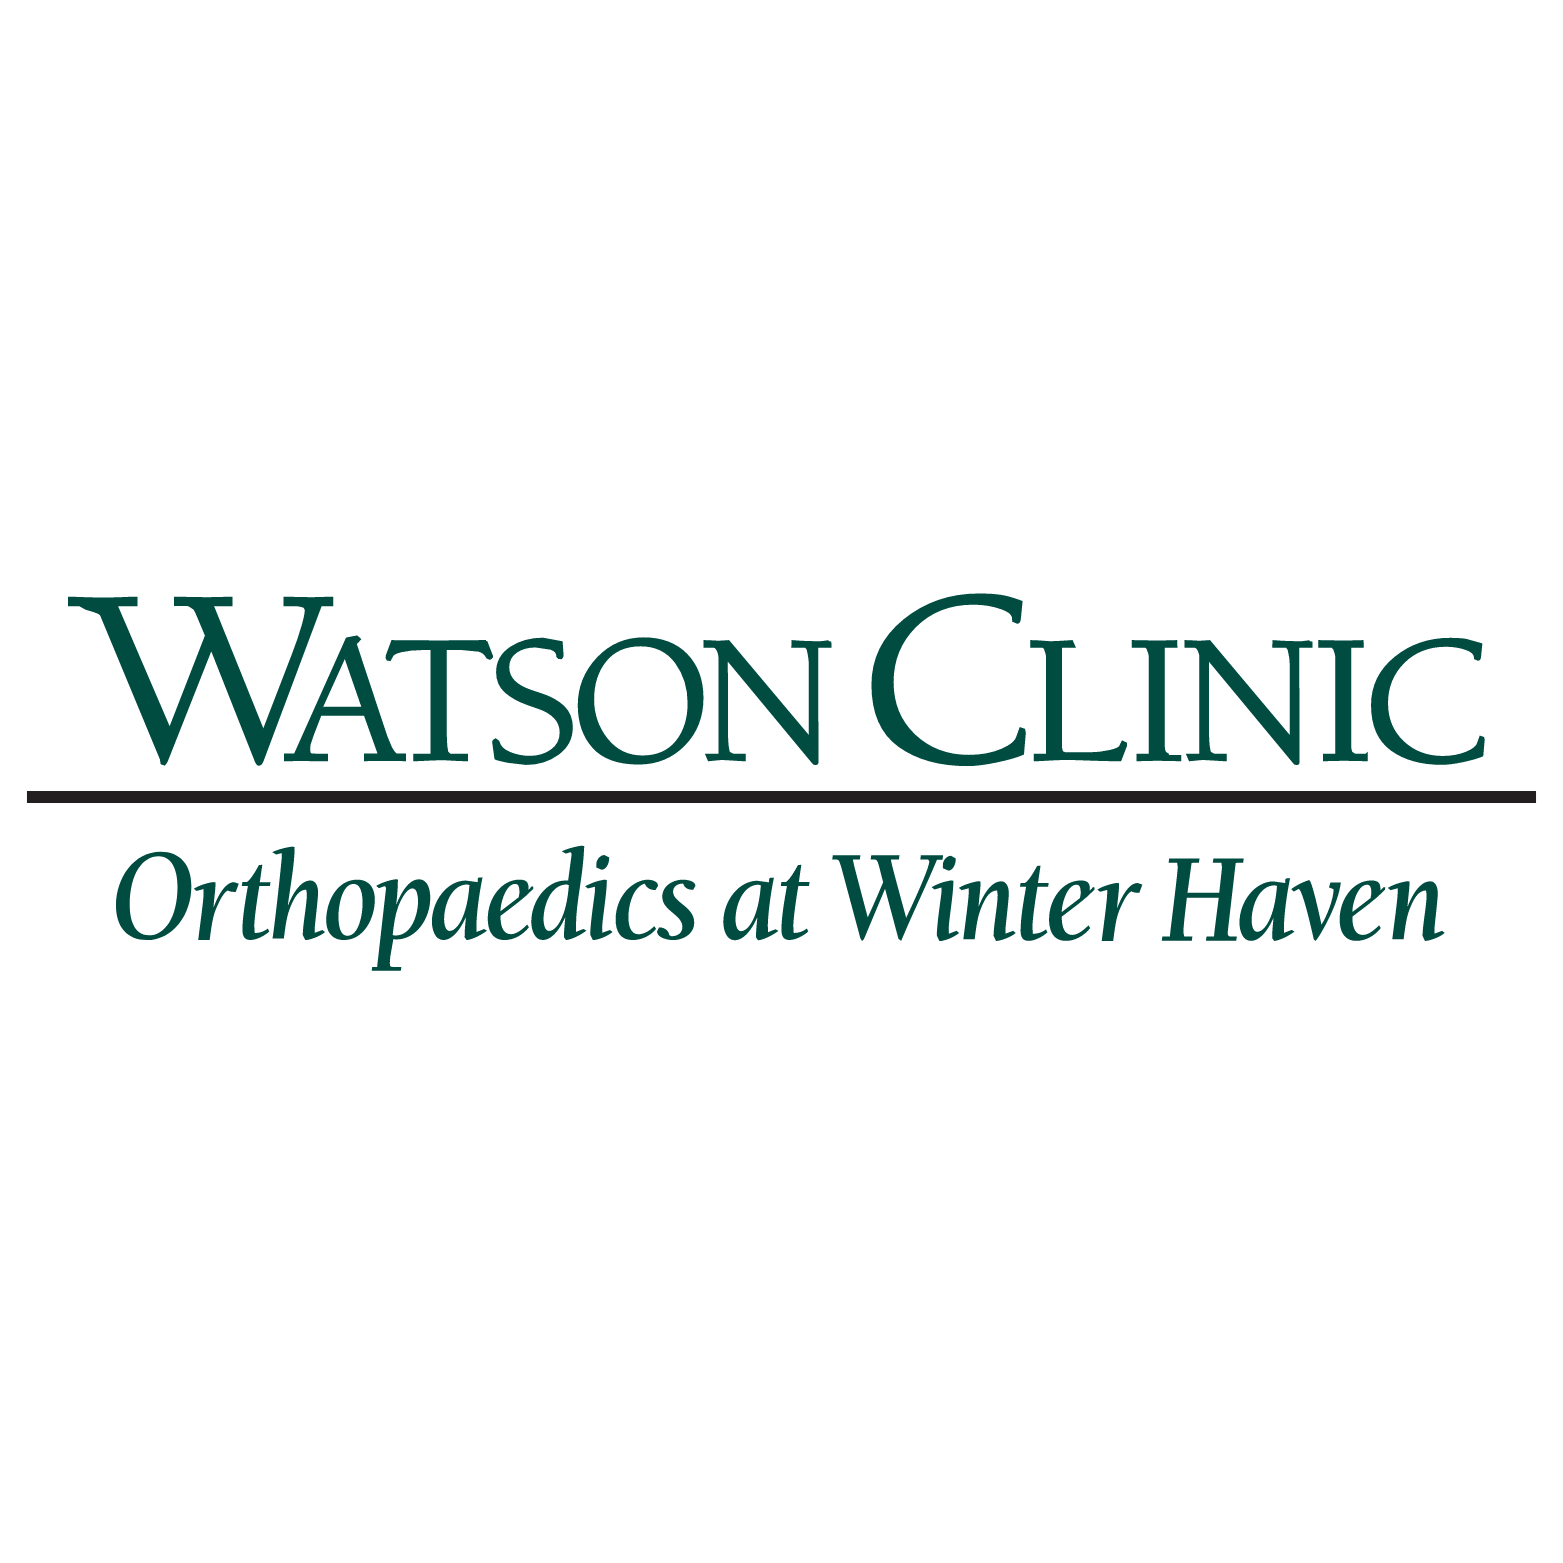 Watson Clinic Orthopaedics at Winter Haven